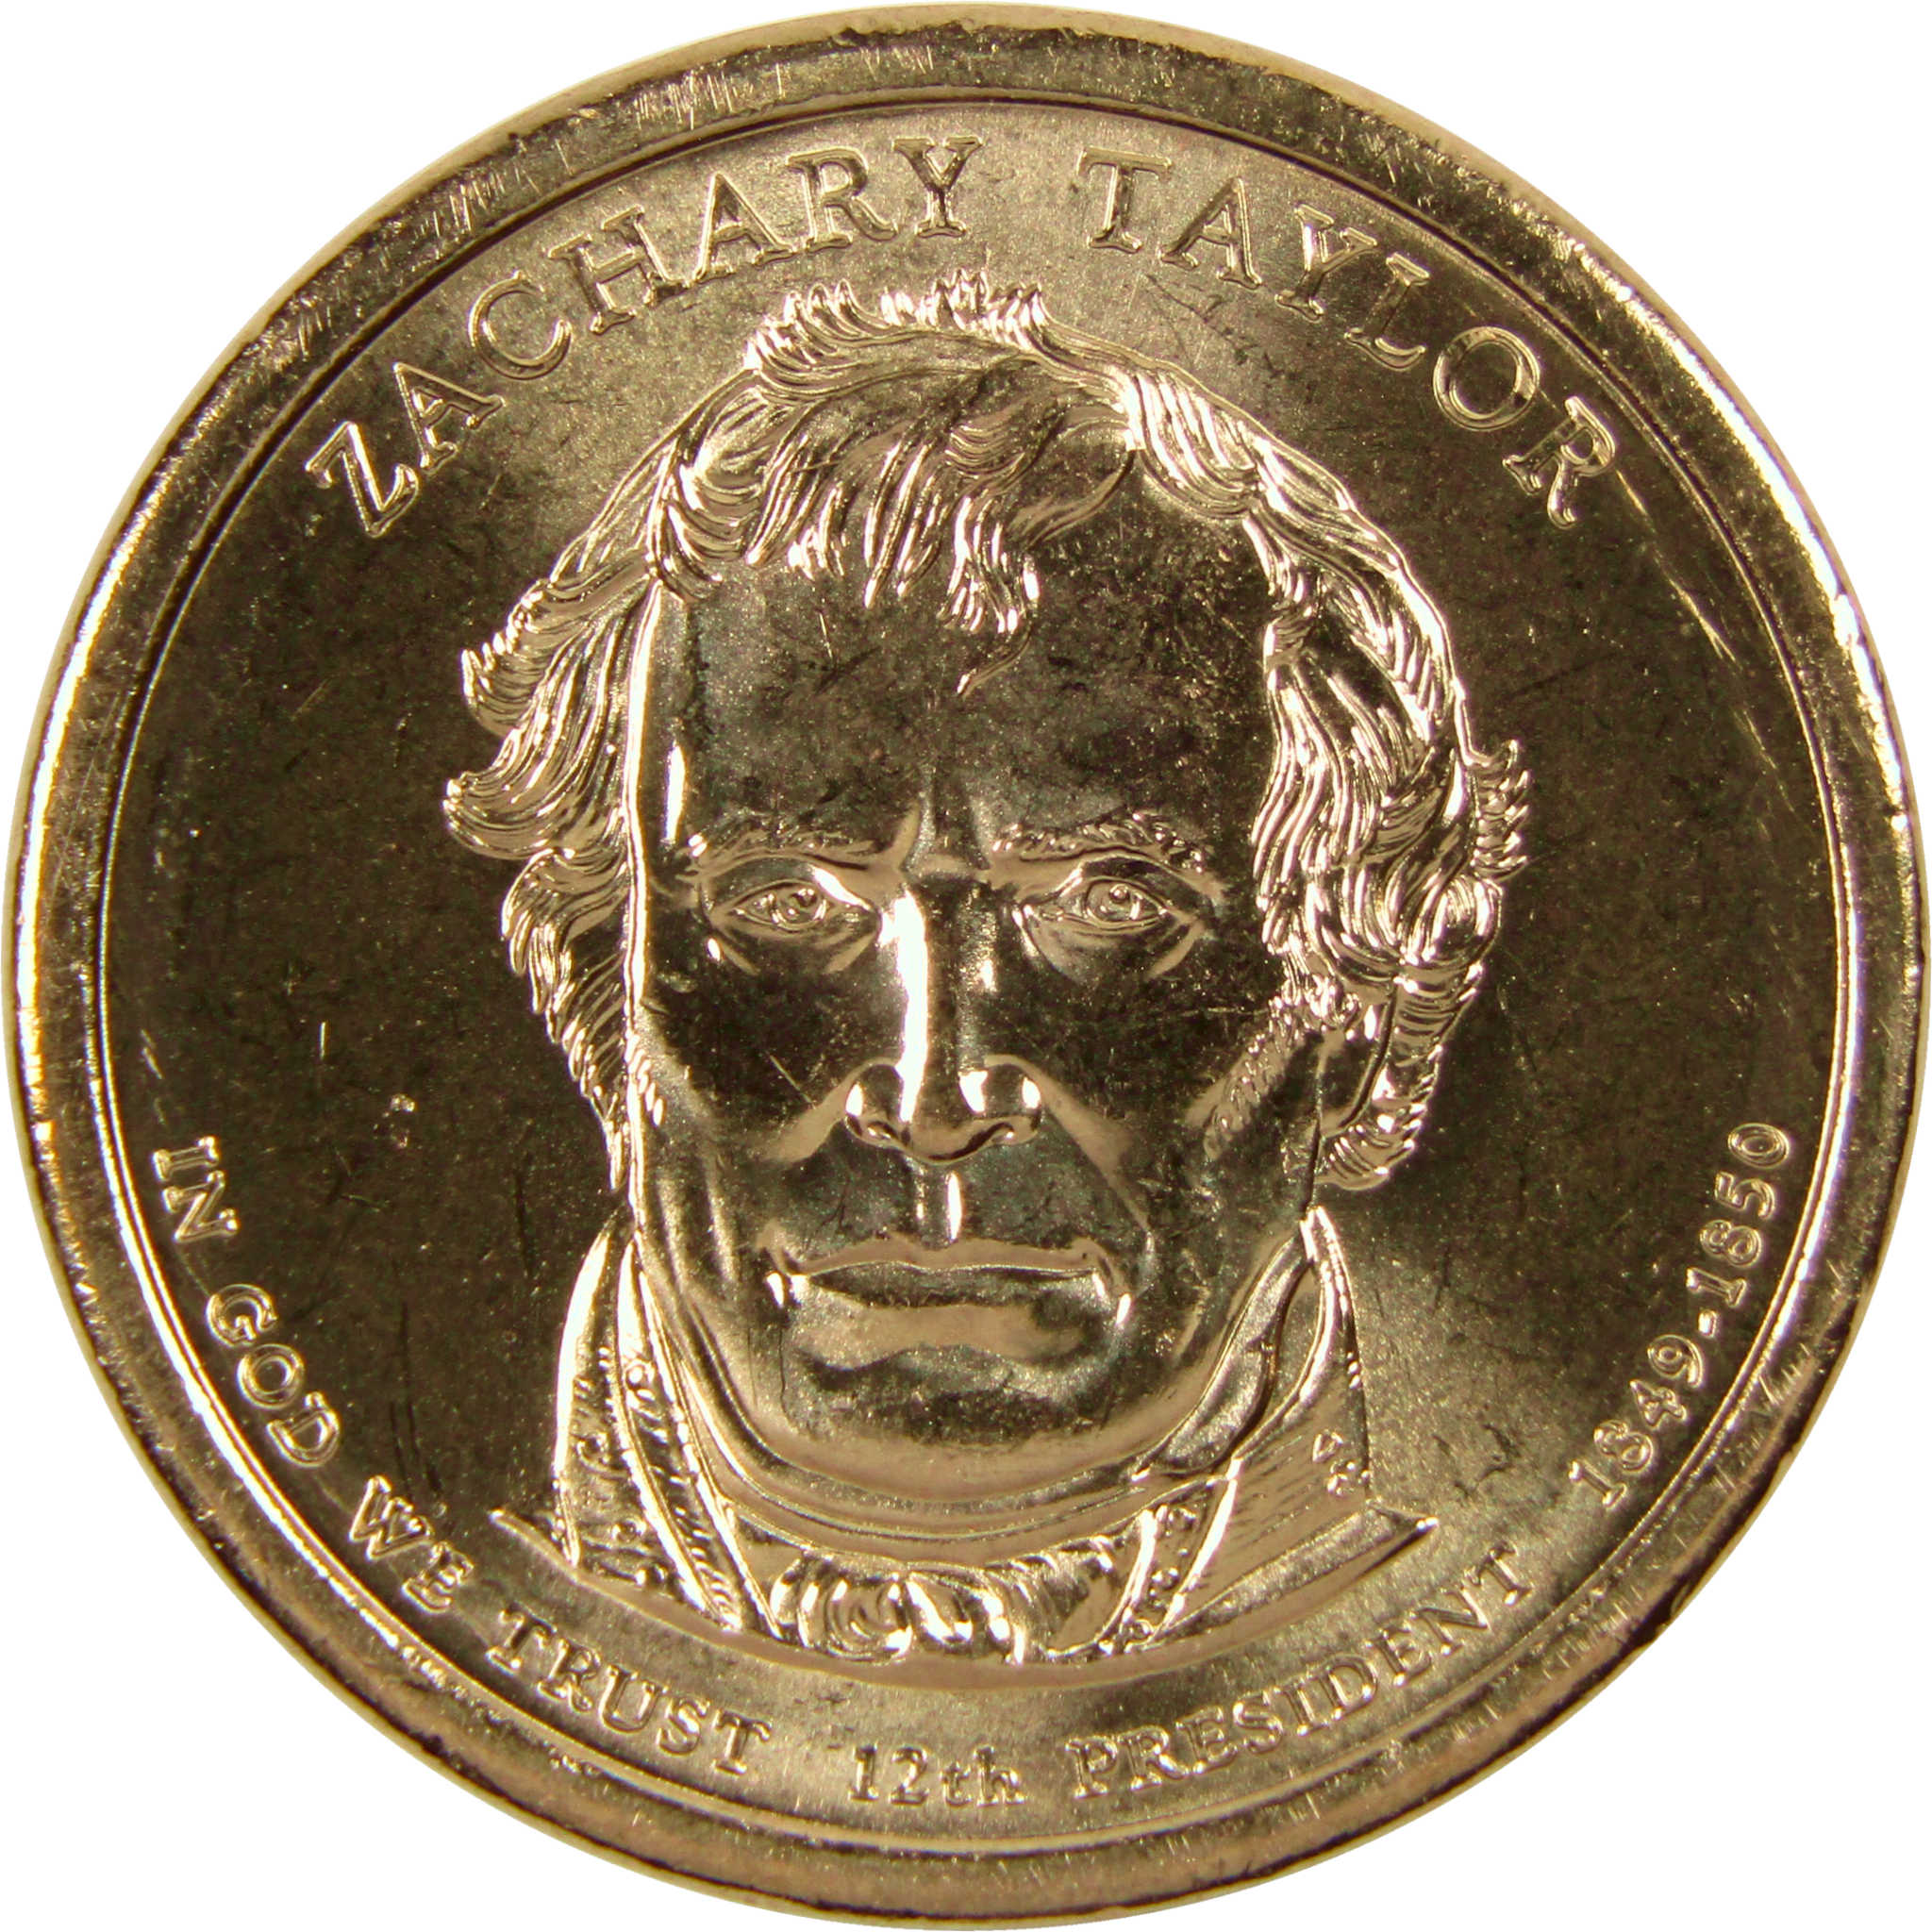 2009 P Zachary Taylor Presidential Dollar BU Uncirculated $1 Coin